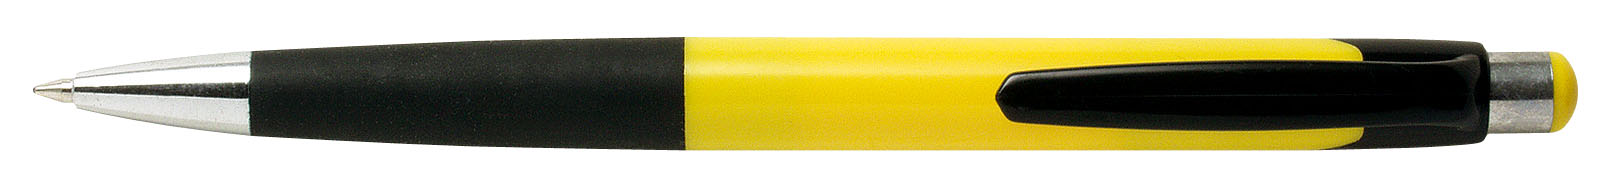 Propiska plast GARNA, žlutá